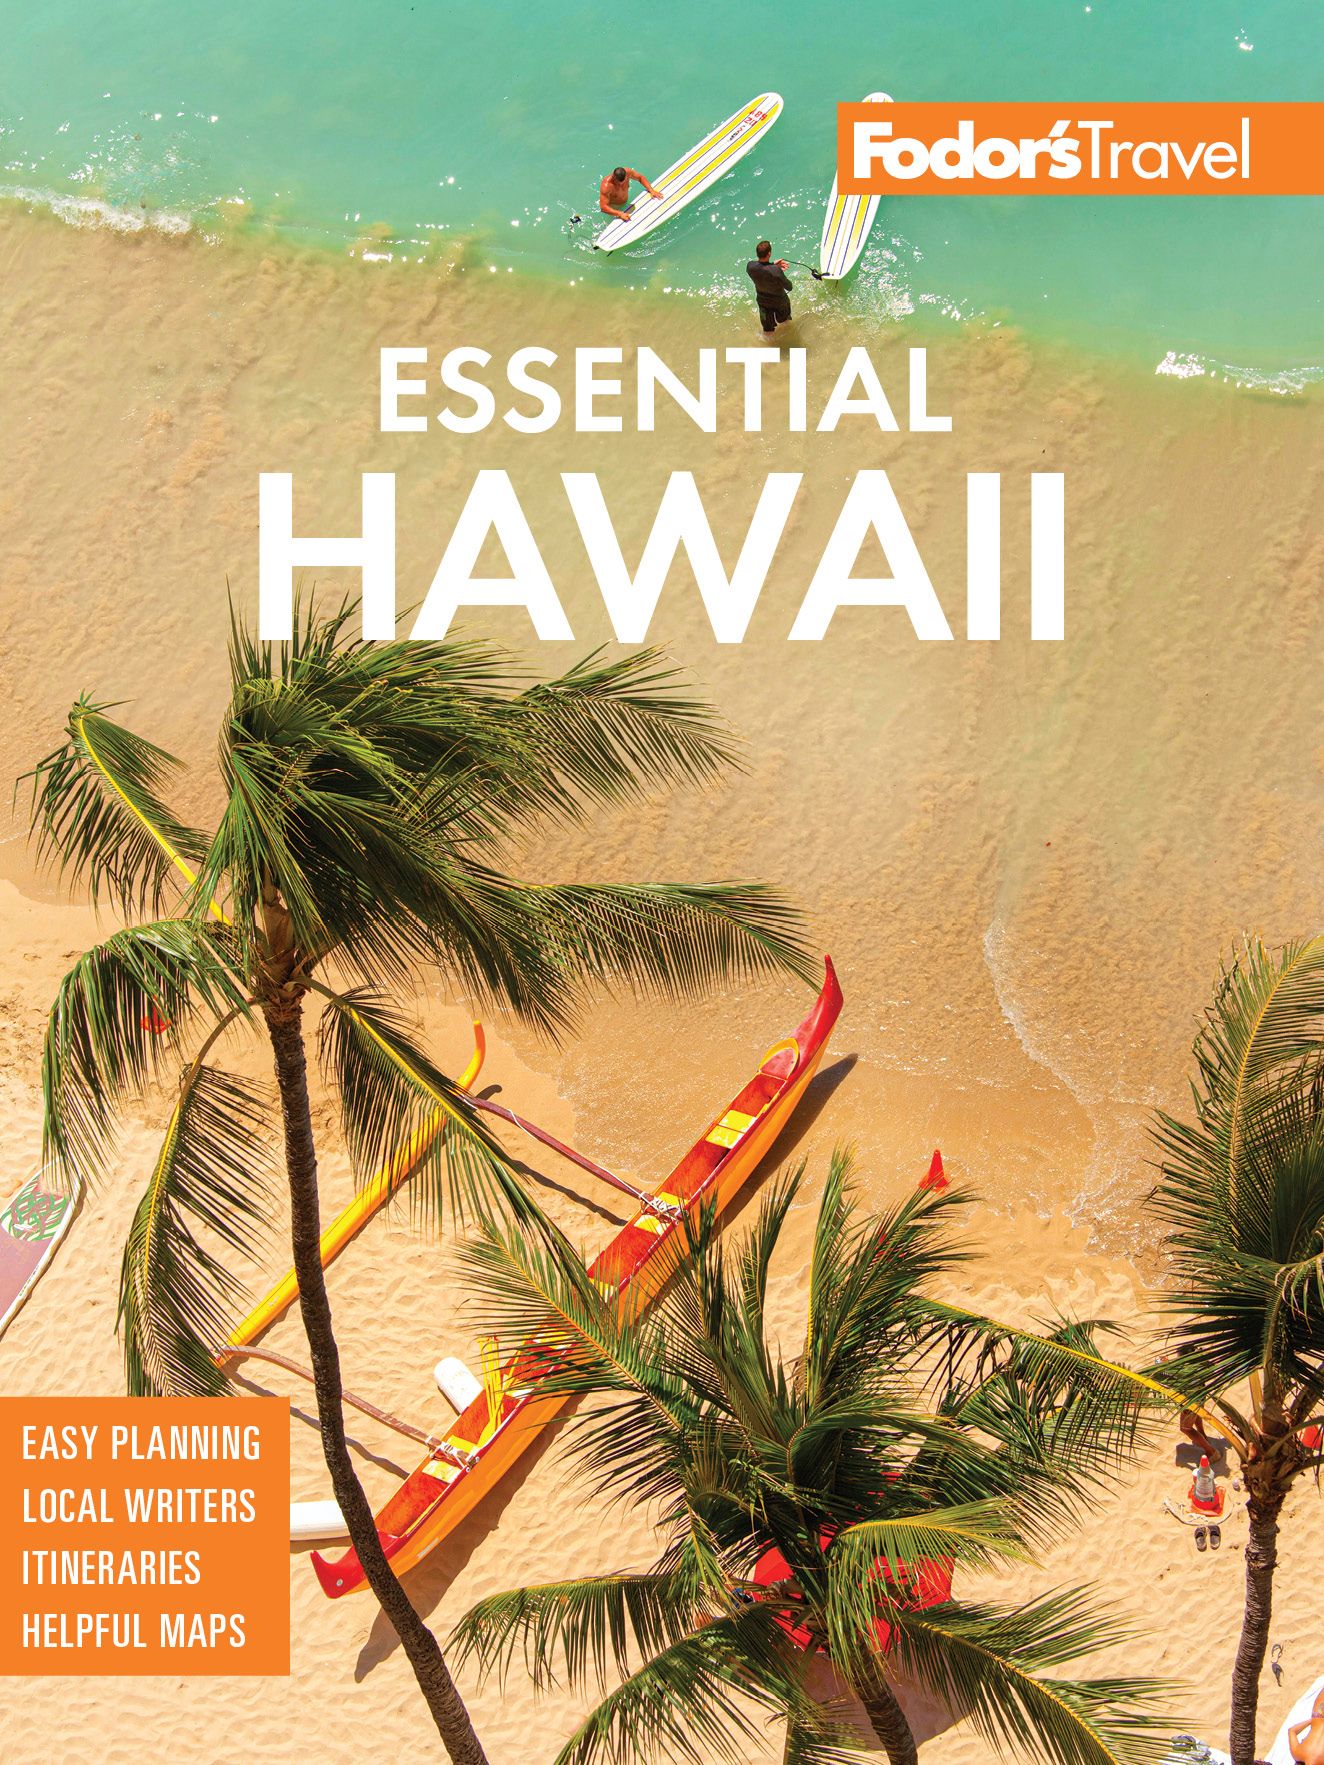 fodors travel guide hawaii